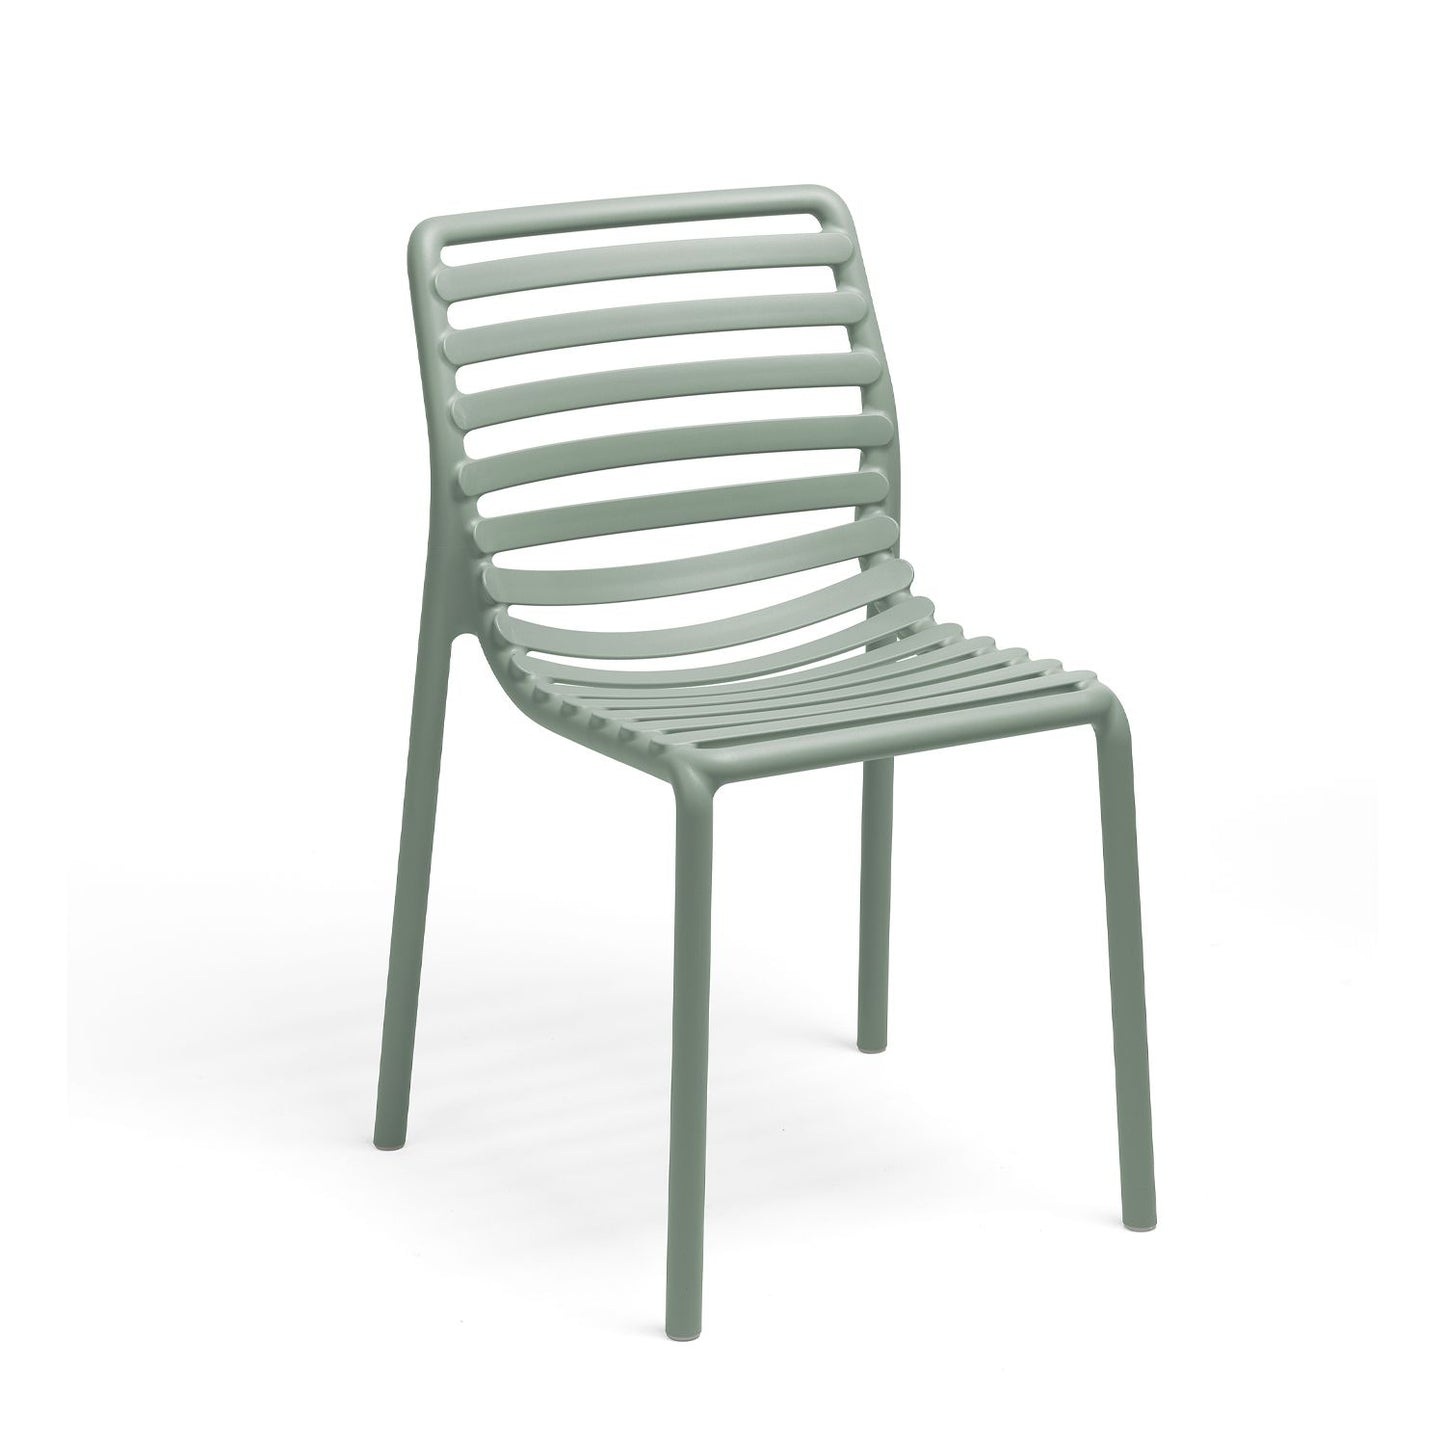 Doga Armless Chair By Nardi - Set Of 6 - Mint